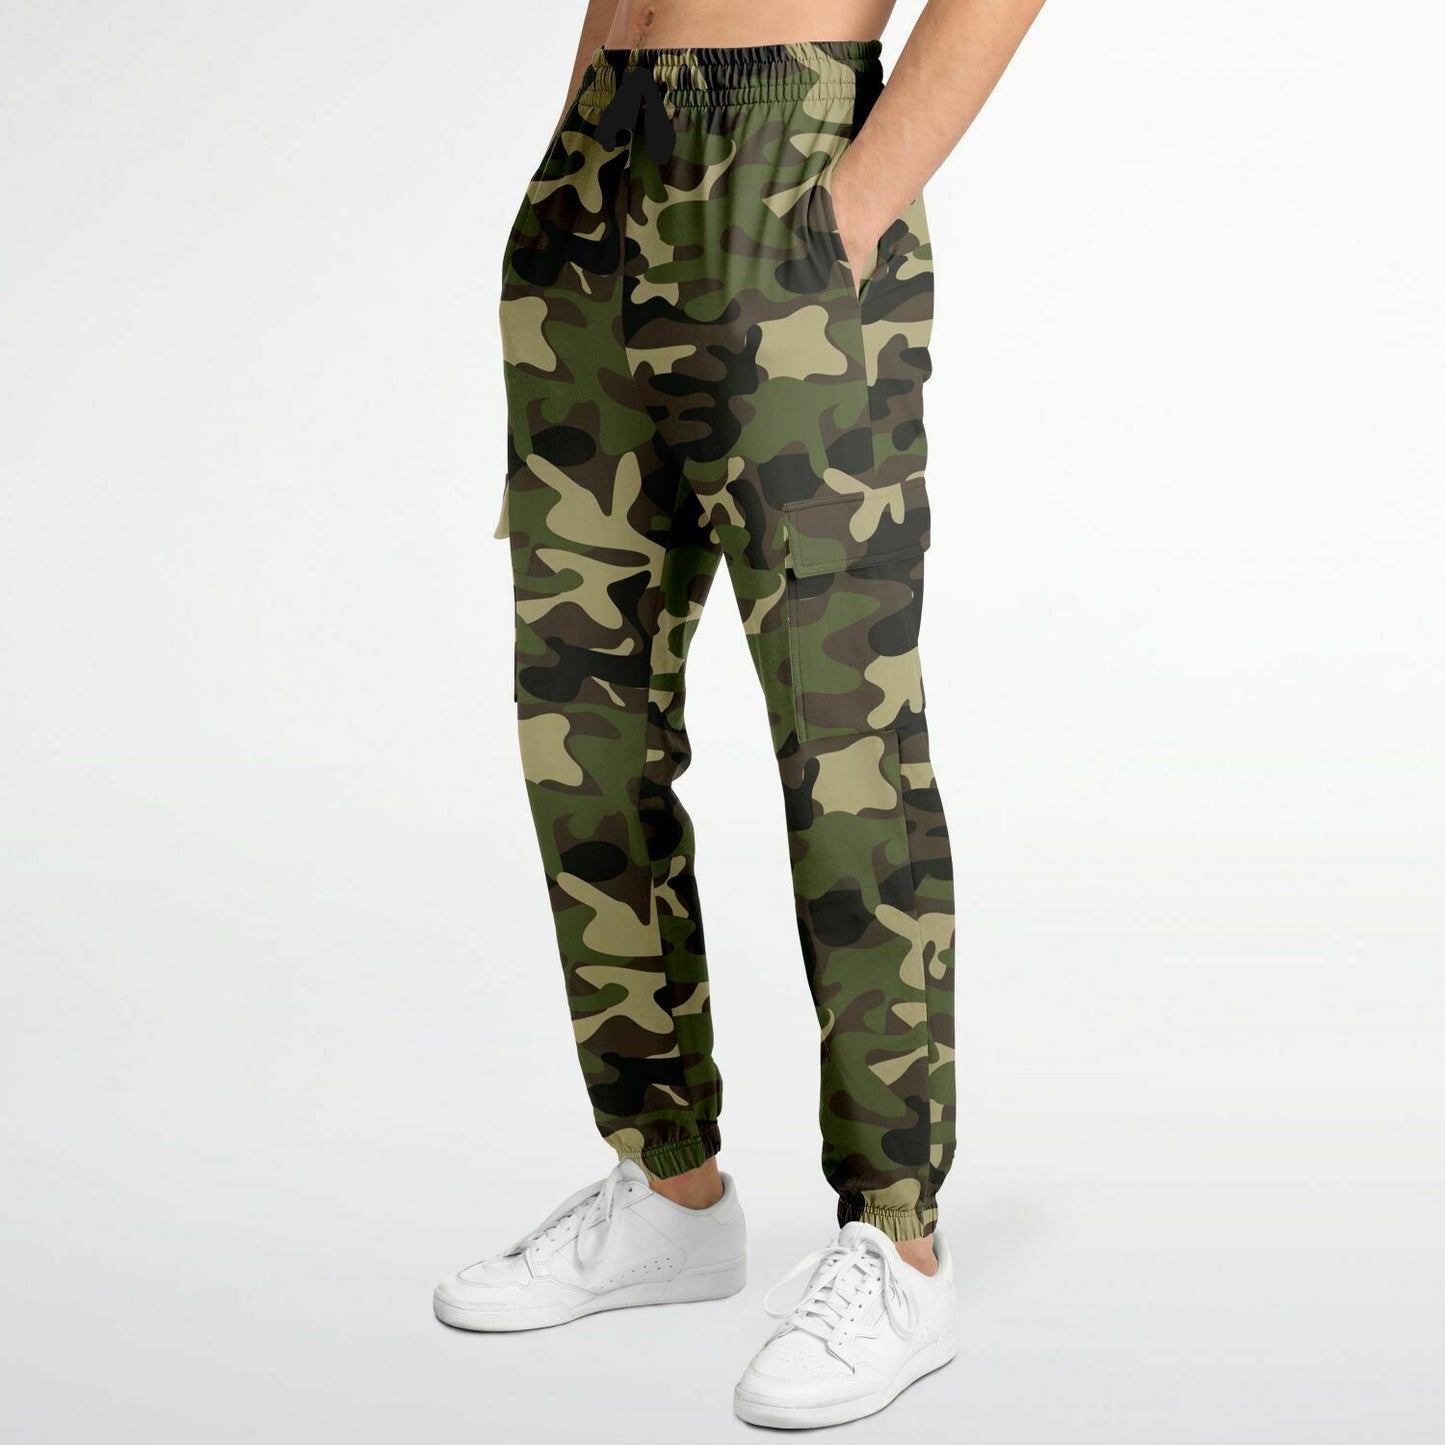 Camouflage Cargo Pants with Flap Pockets, Green Army Camo Women Men Fleece Joggers Sweatpants Fun Comfy Cotton Sweats Streetwear Starcove Fashion